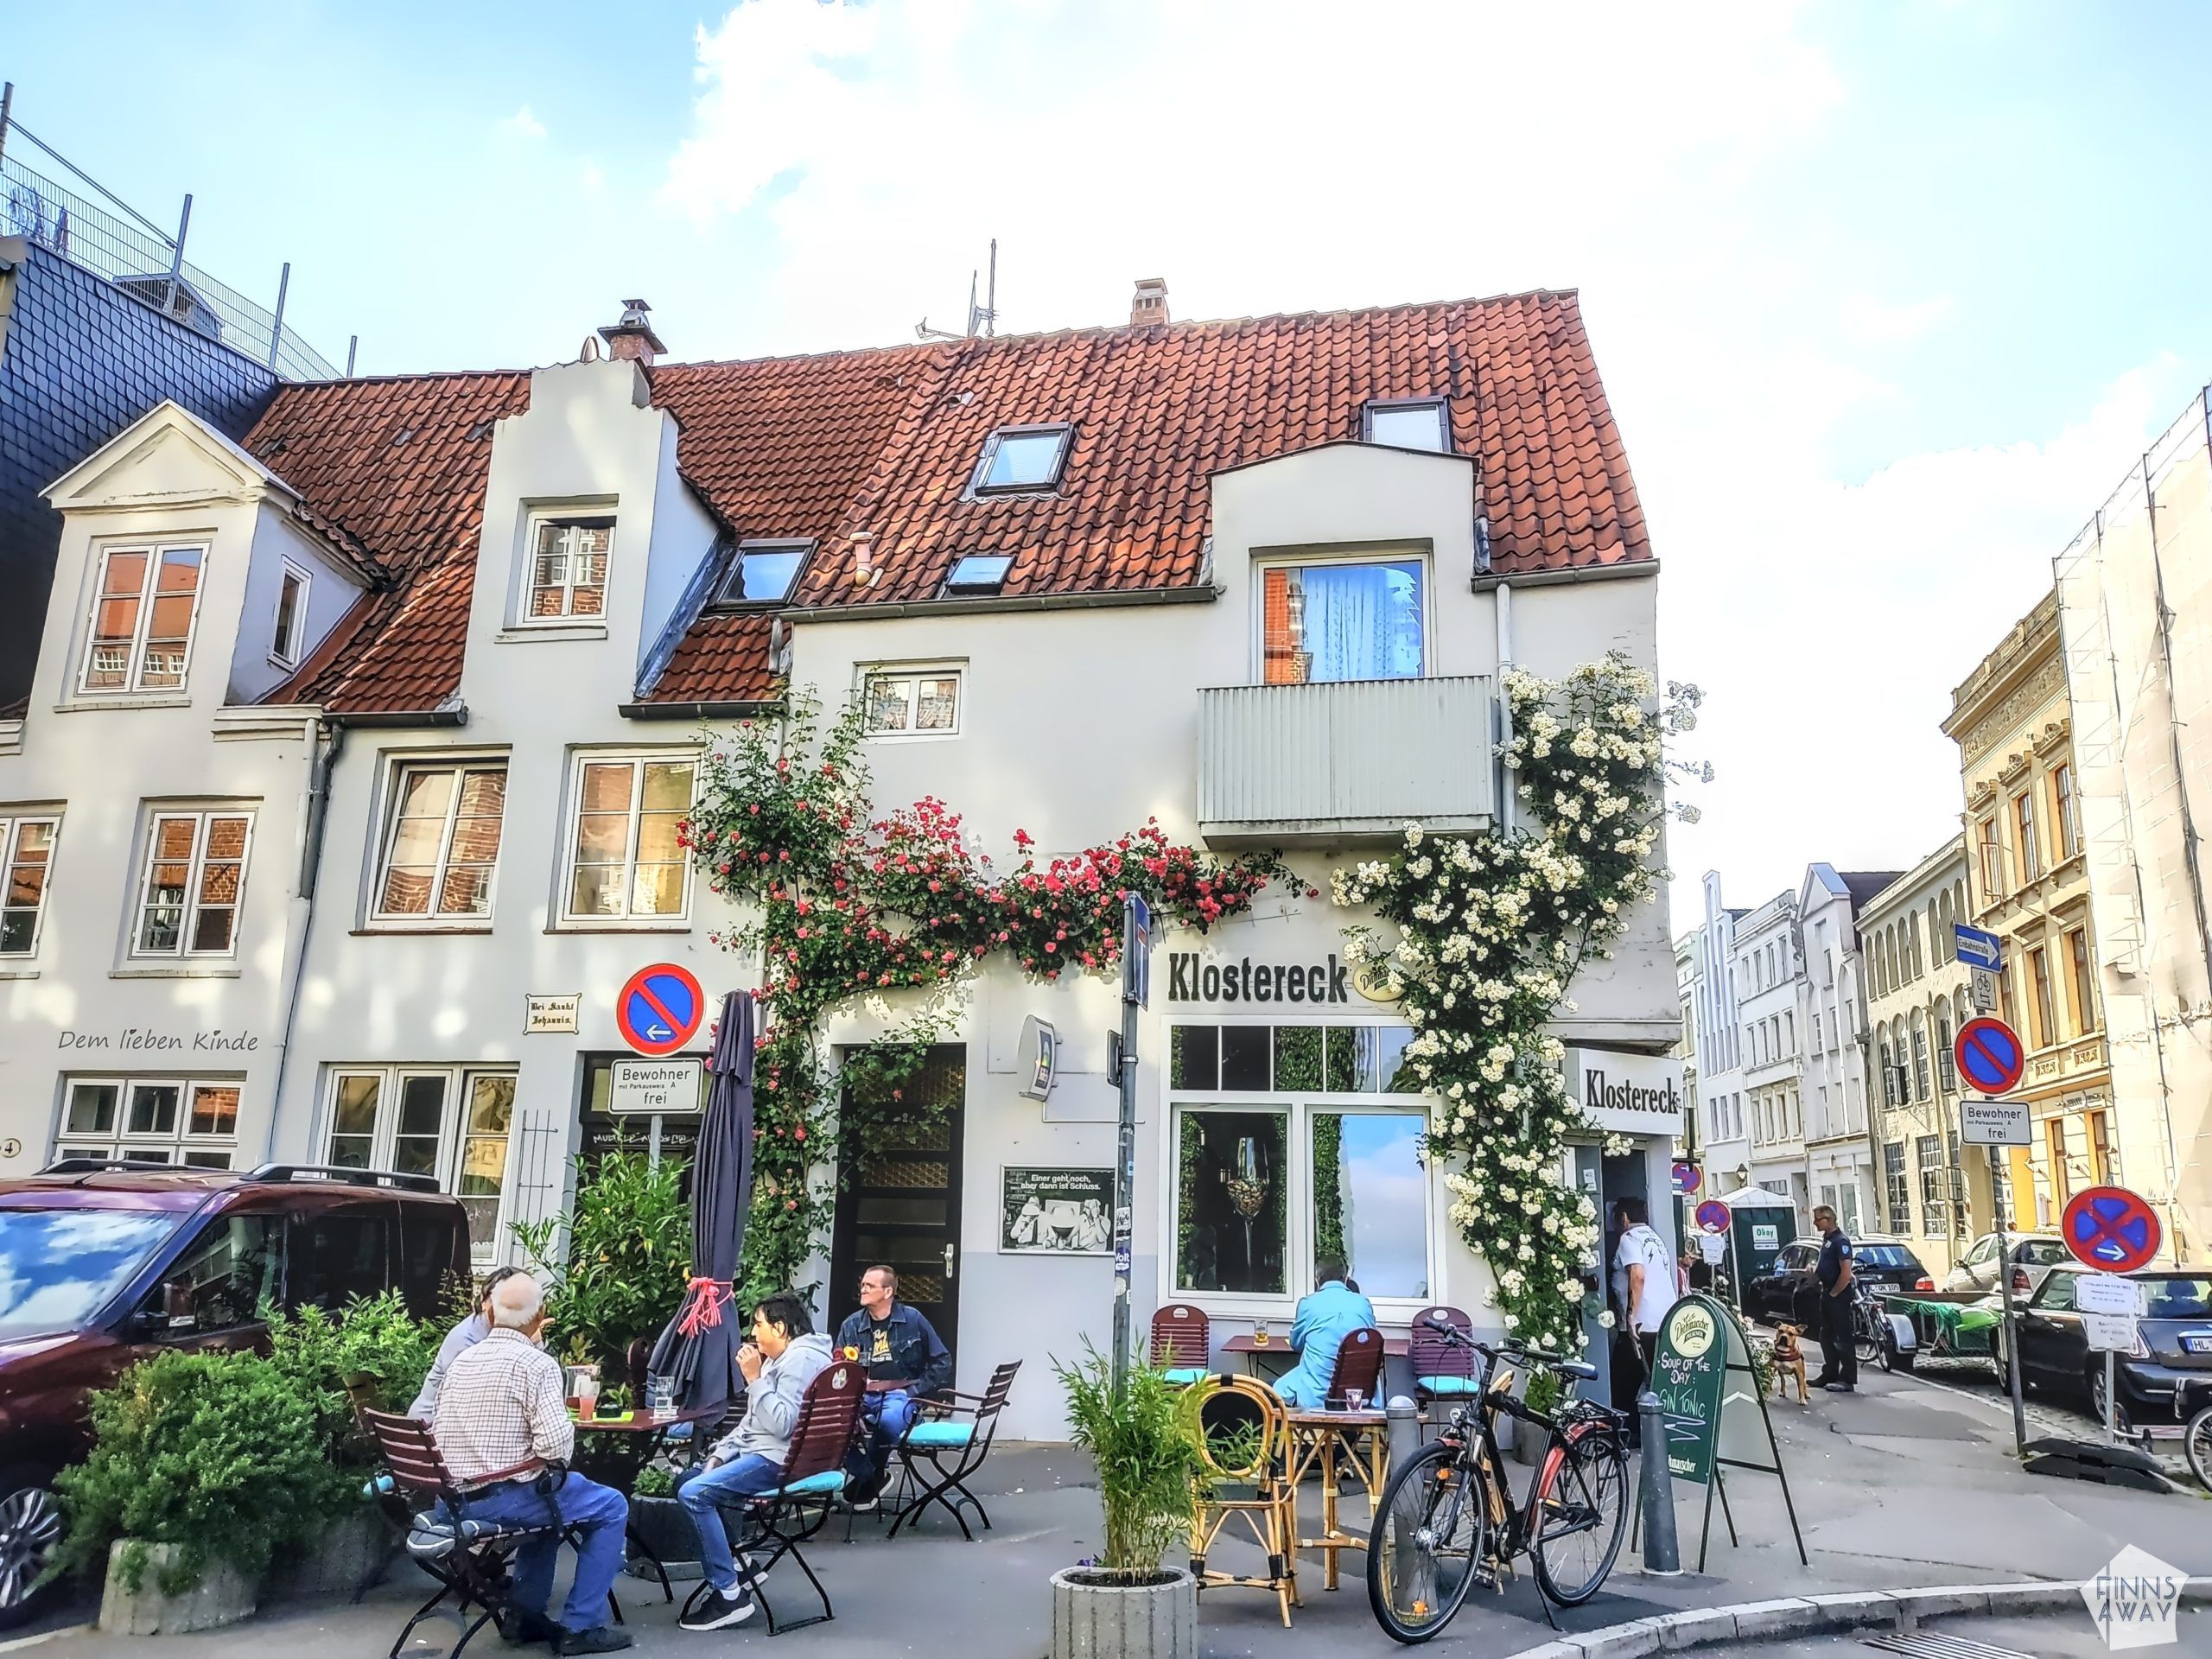 Postcards from Lübeck, Germany | FinnsAway Travel Blog